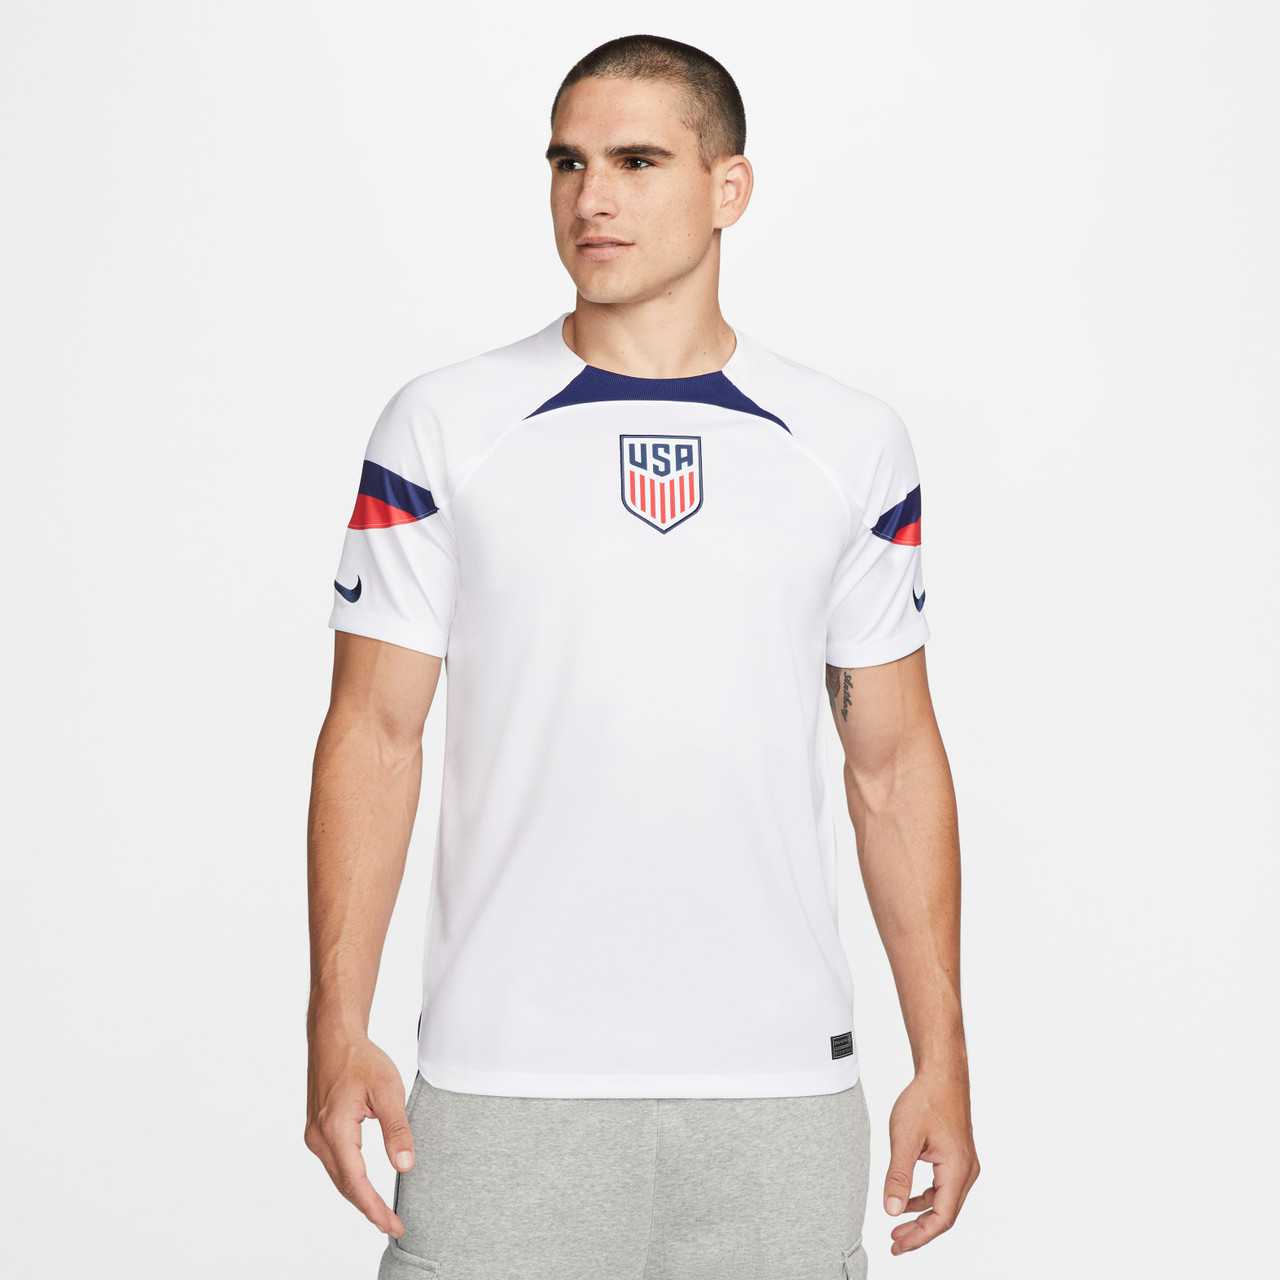 New U.S. home jersey revealed: Collared white shirt, white shorts, white  socks - Sports Illustrated